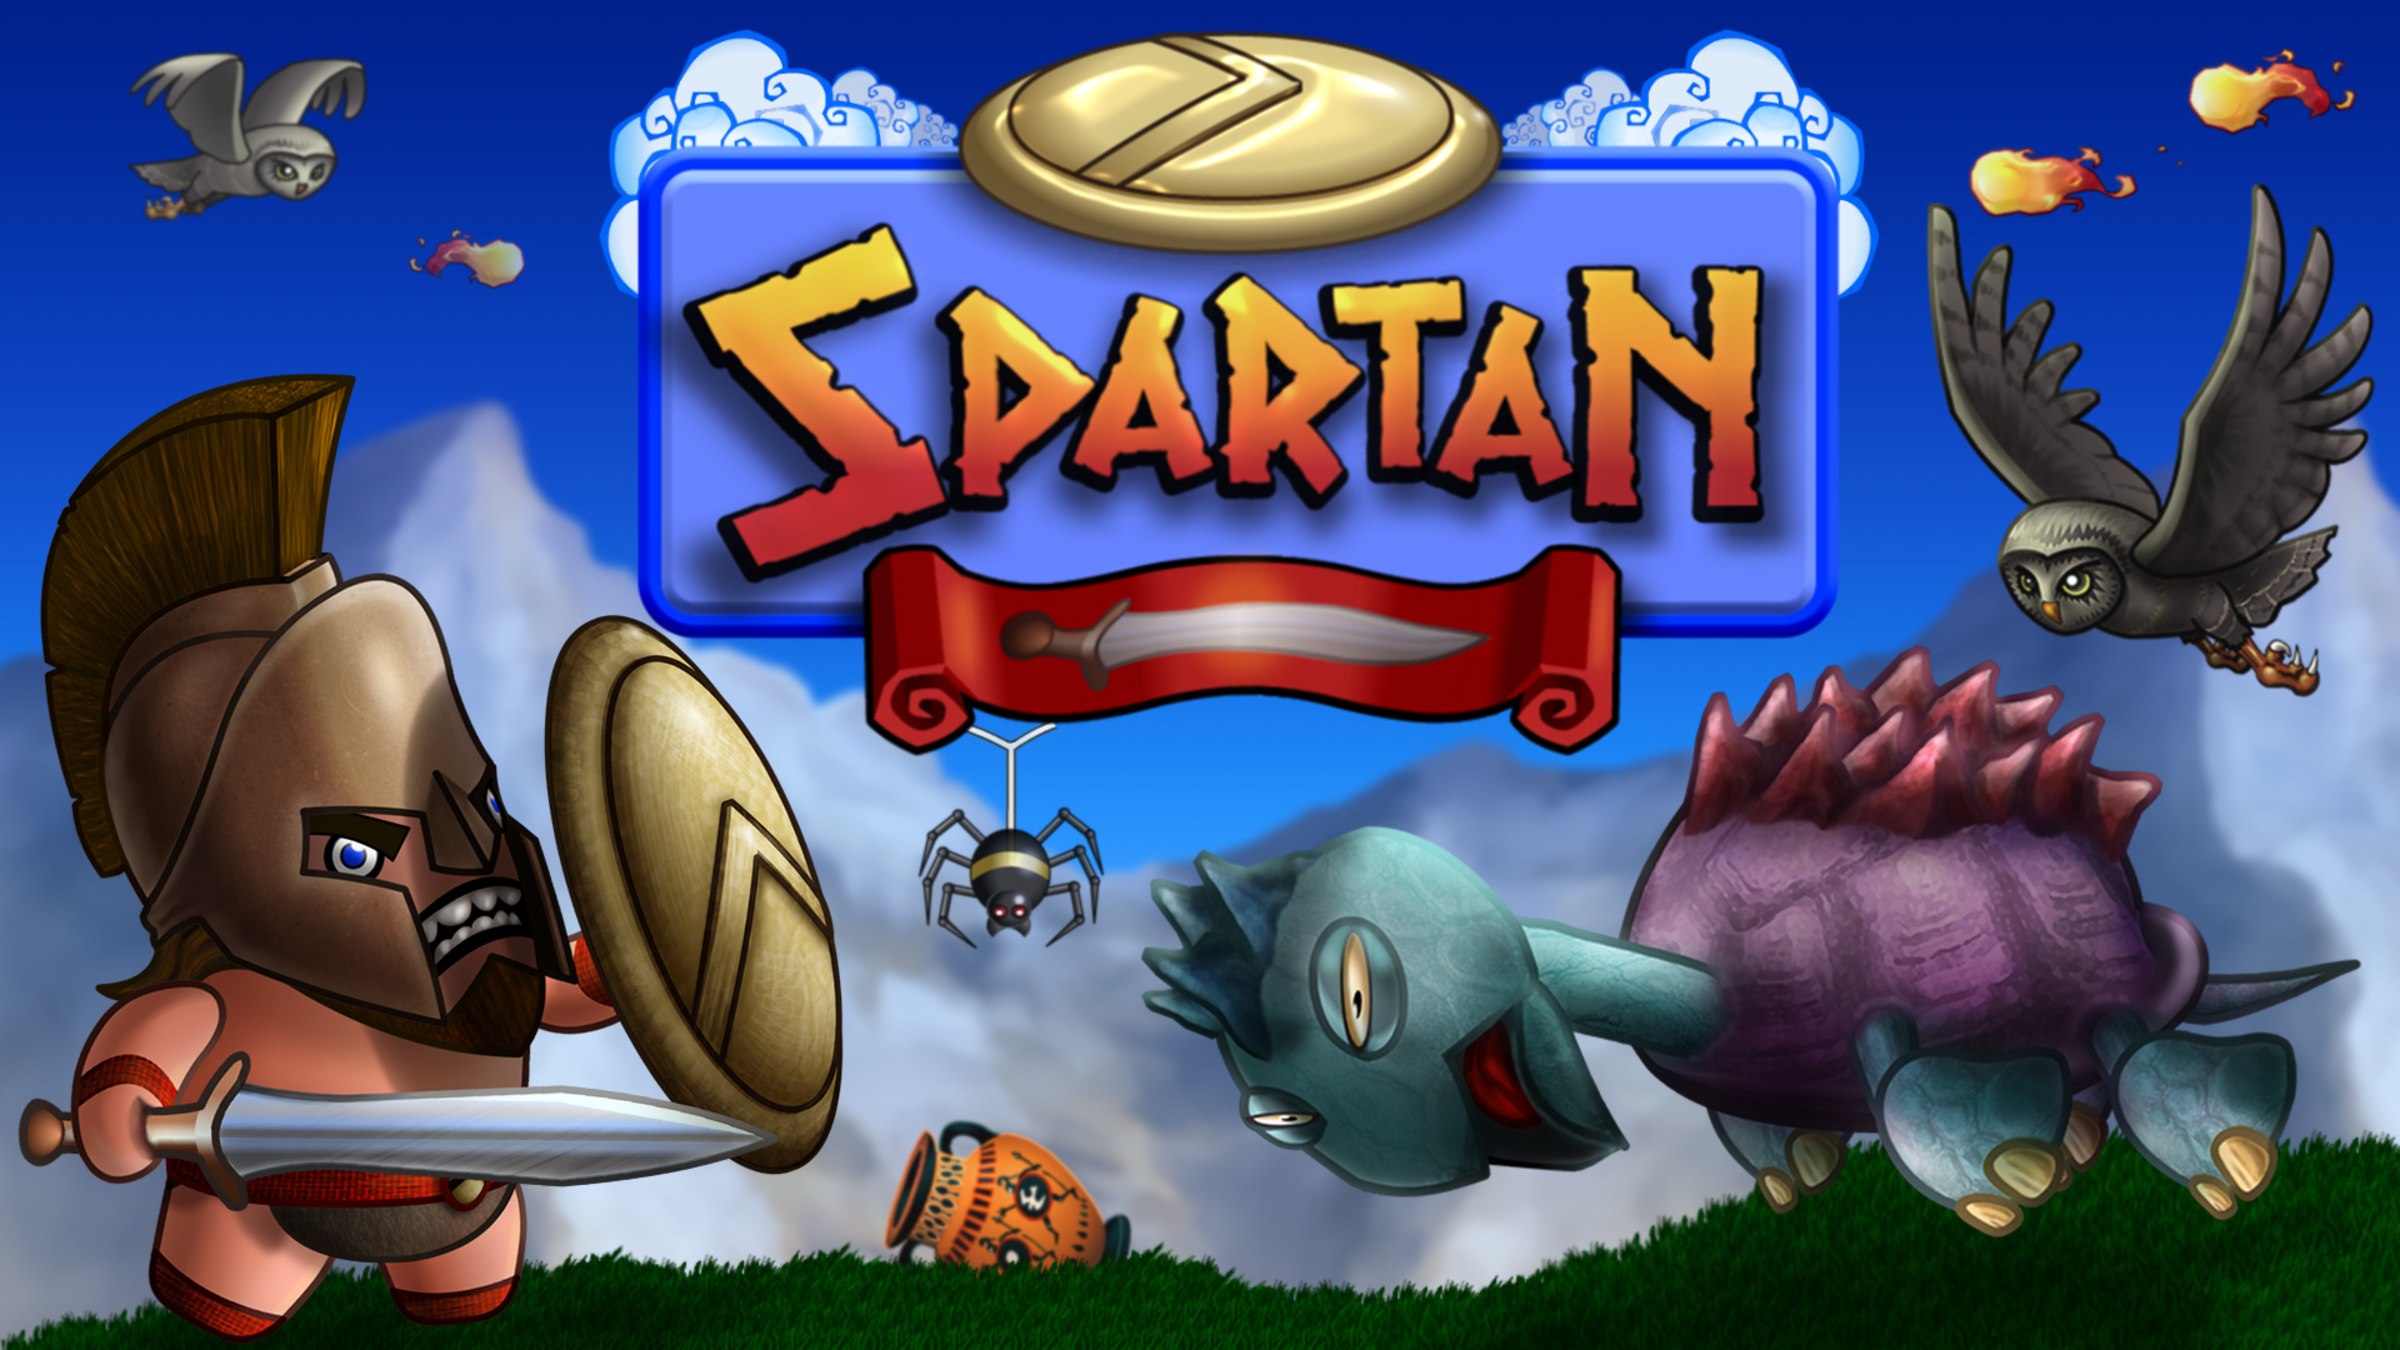 Spartan for Nintendo Switch - Nintendo Official Site